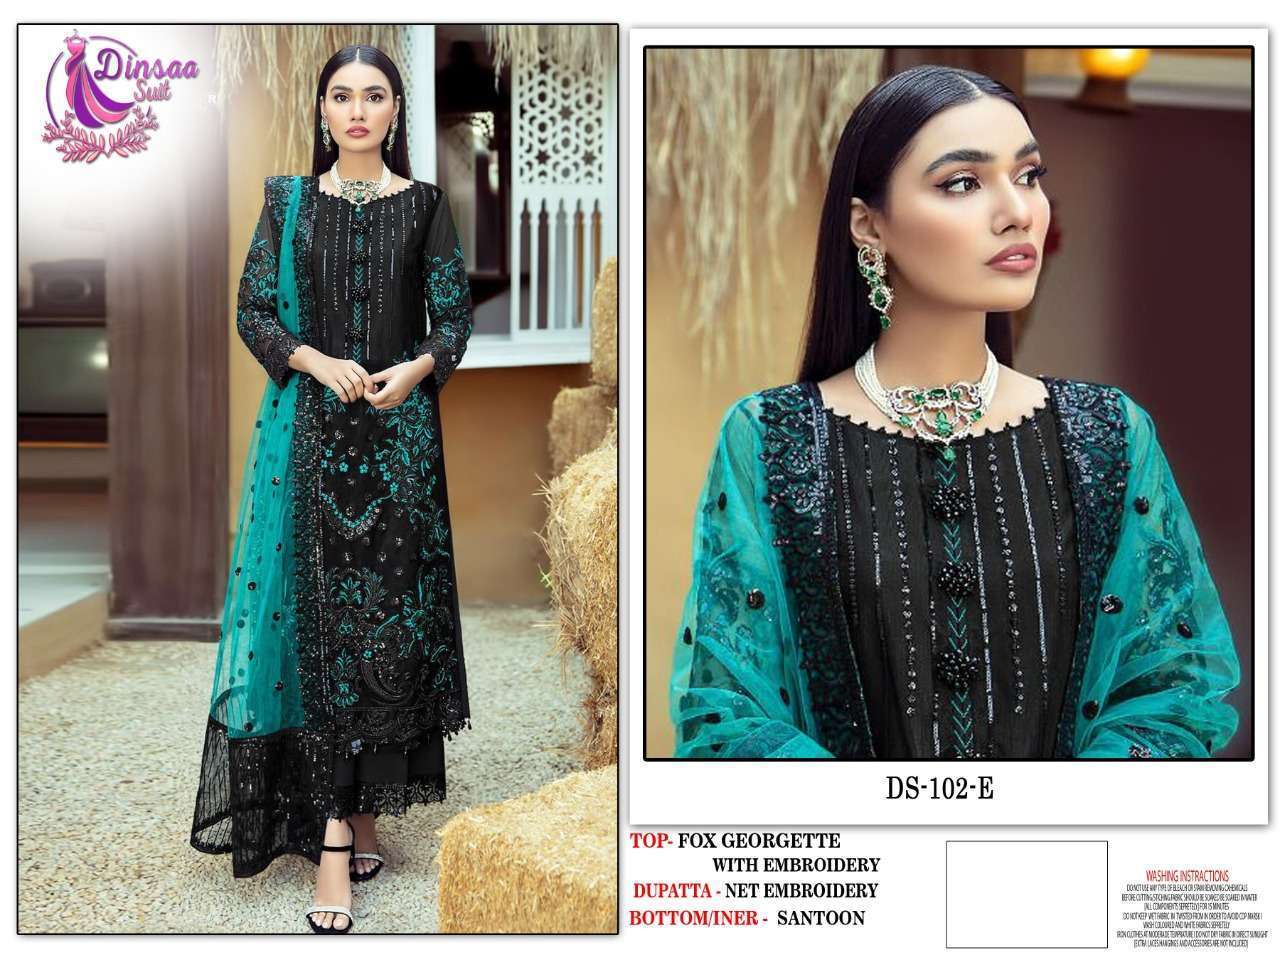 Dinsaa 102 E To H Designer Pakistani Suits Wholesale catalog